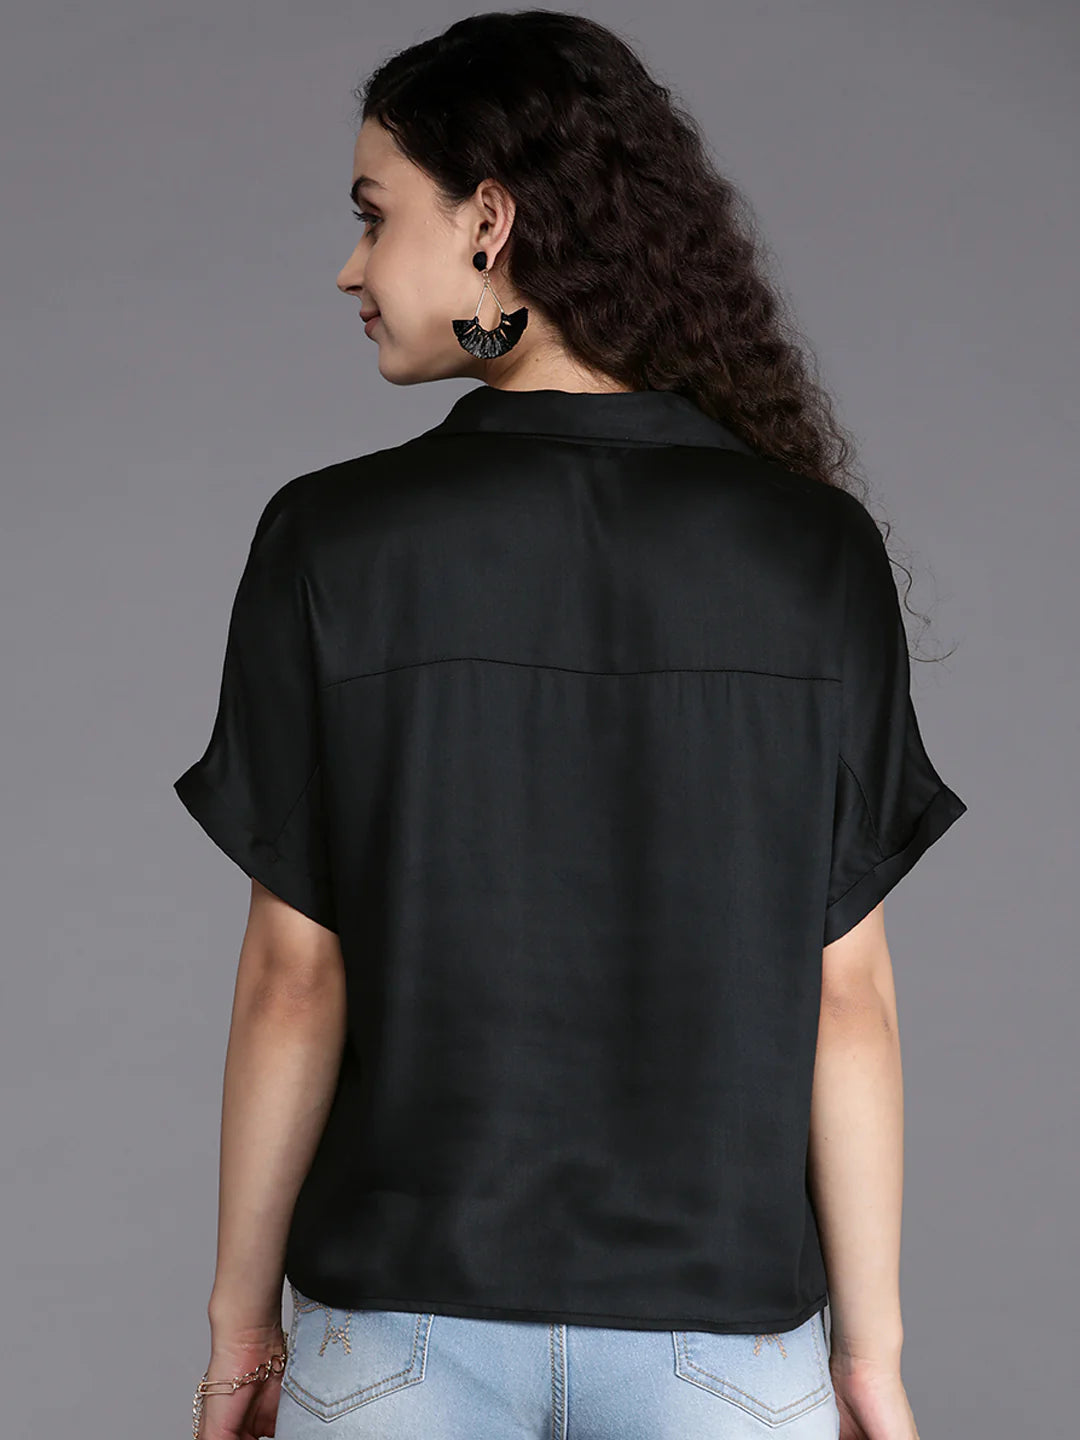 Black Satin Shirt Top | Chic Black Satin Half-Placket Shirt Top